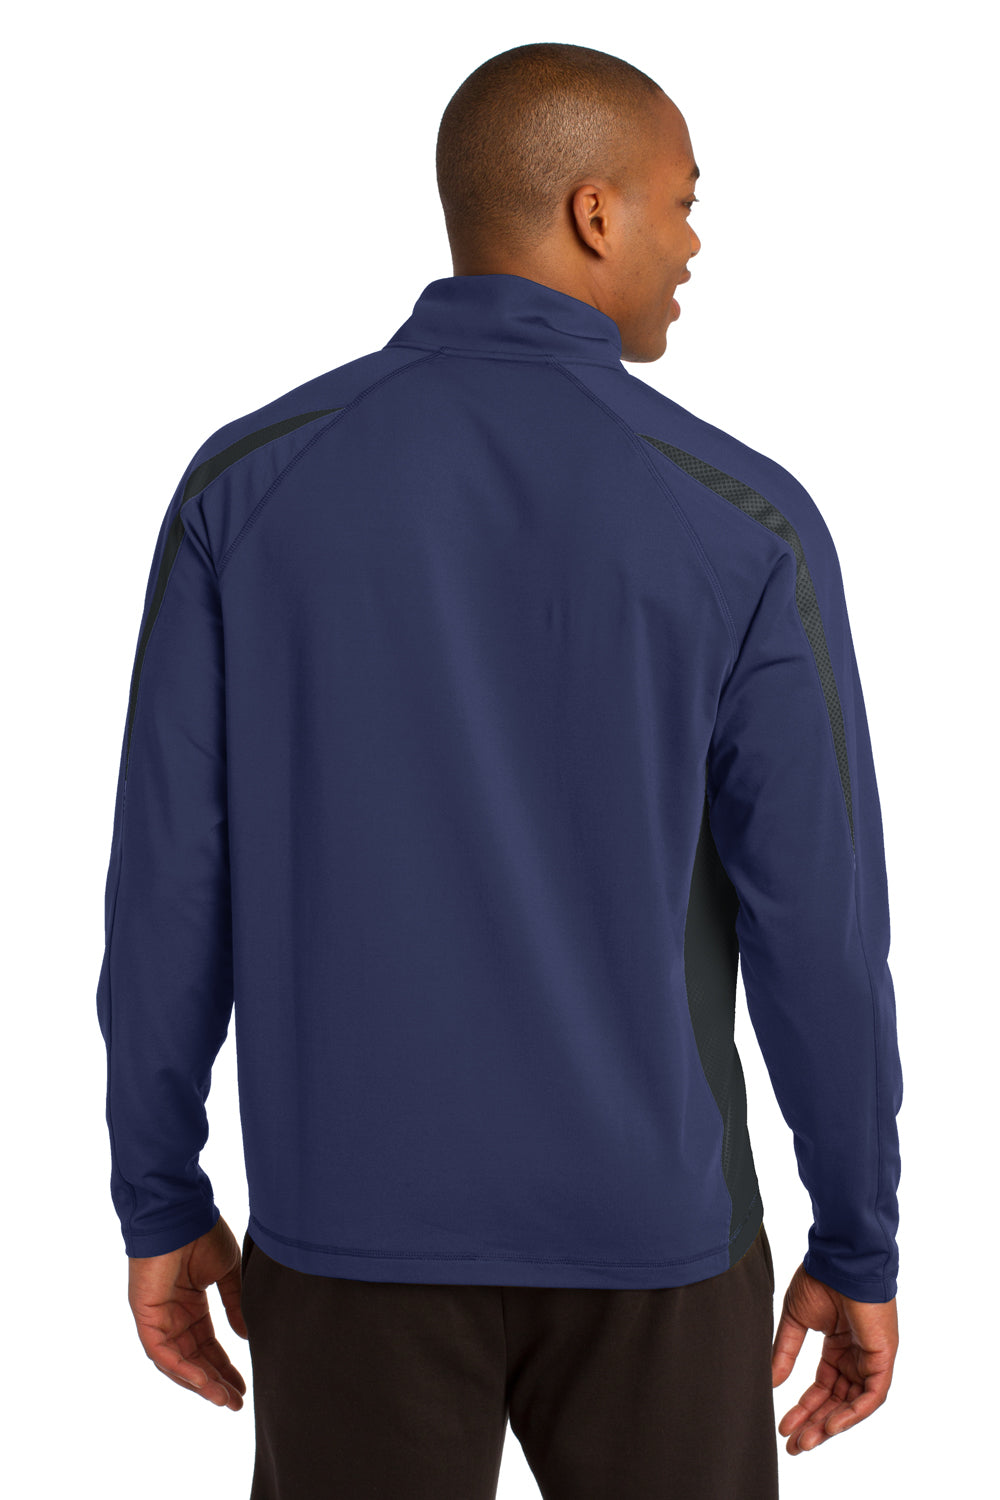 Sport-Tek ST851 Mens Sport-Wick Moisture Wicking 1/4 Zip Sweatshirt Navy Blue/Charcoal Grey Back